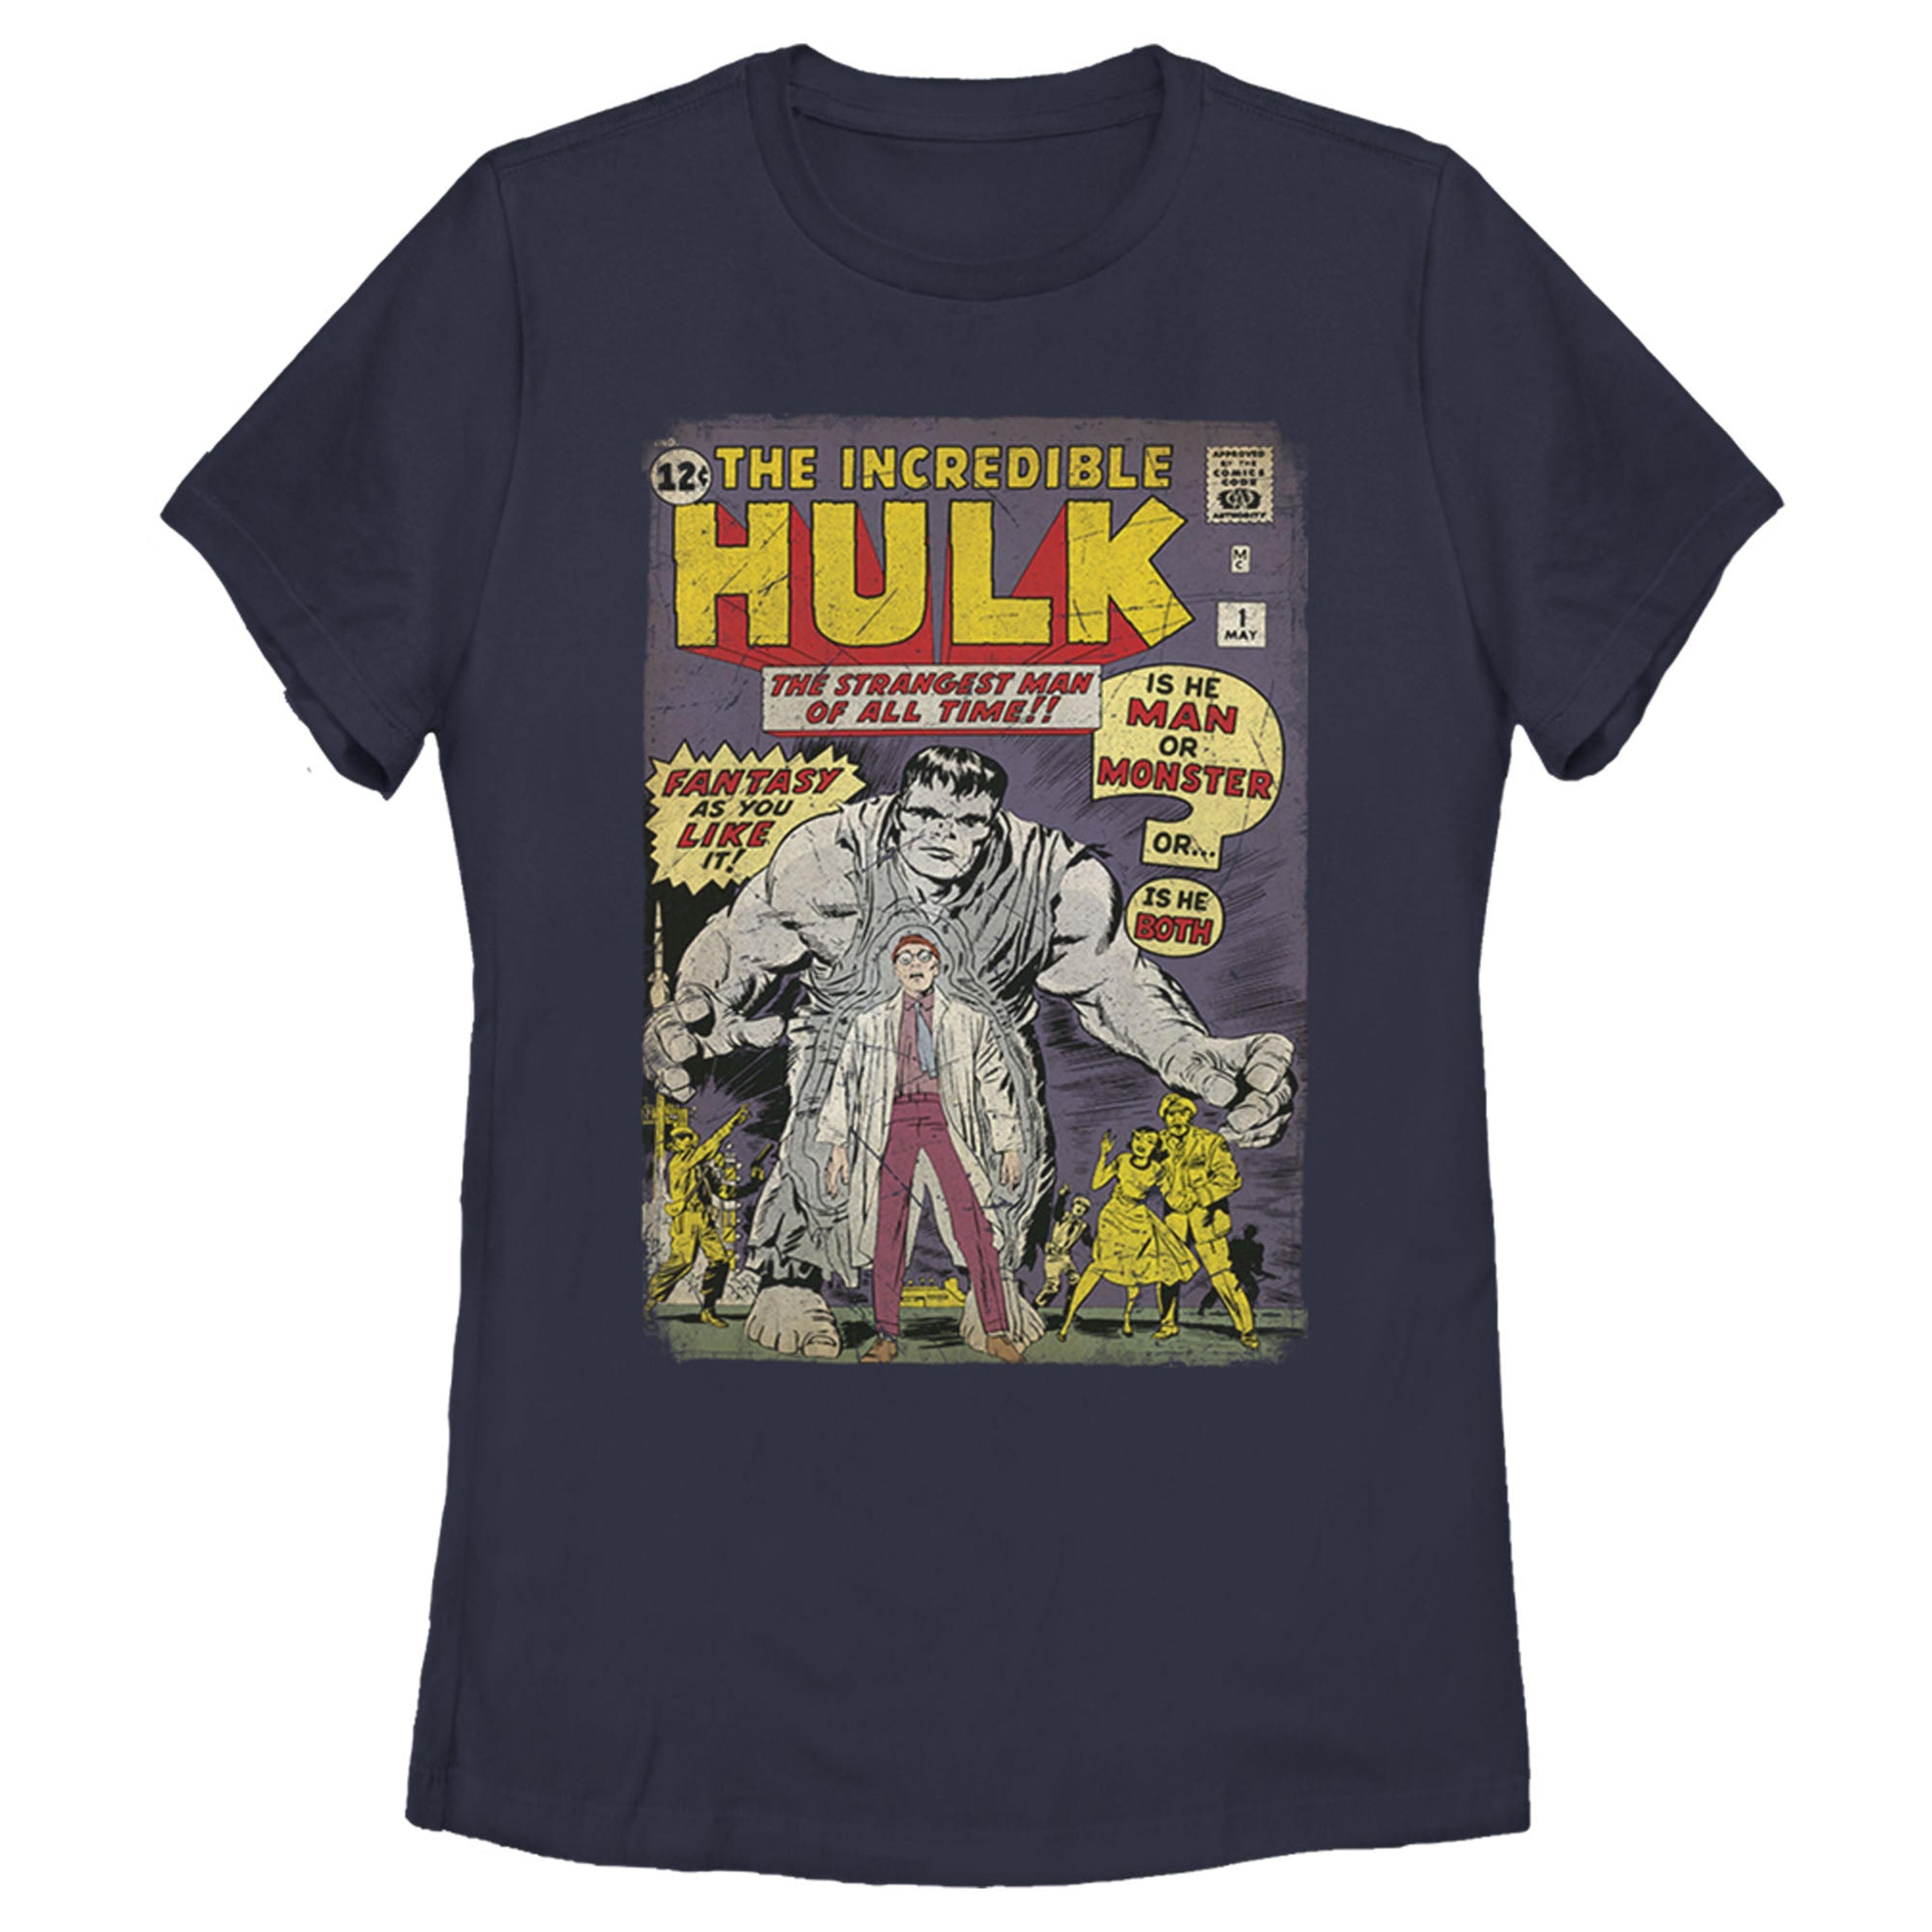 Alternate View 2 of Women's Marvel Hulk Comic Book Cover Print T-Shirt